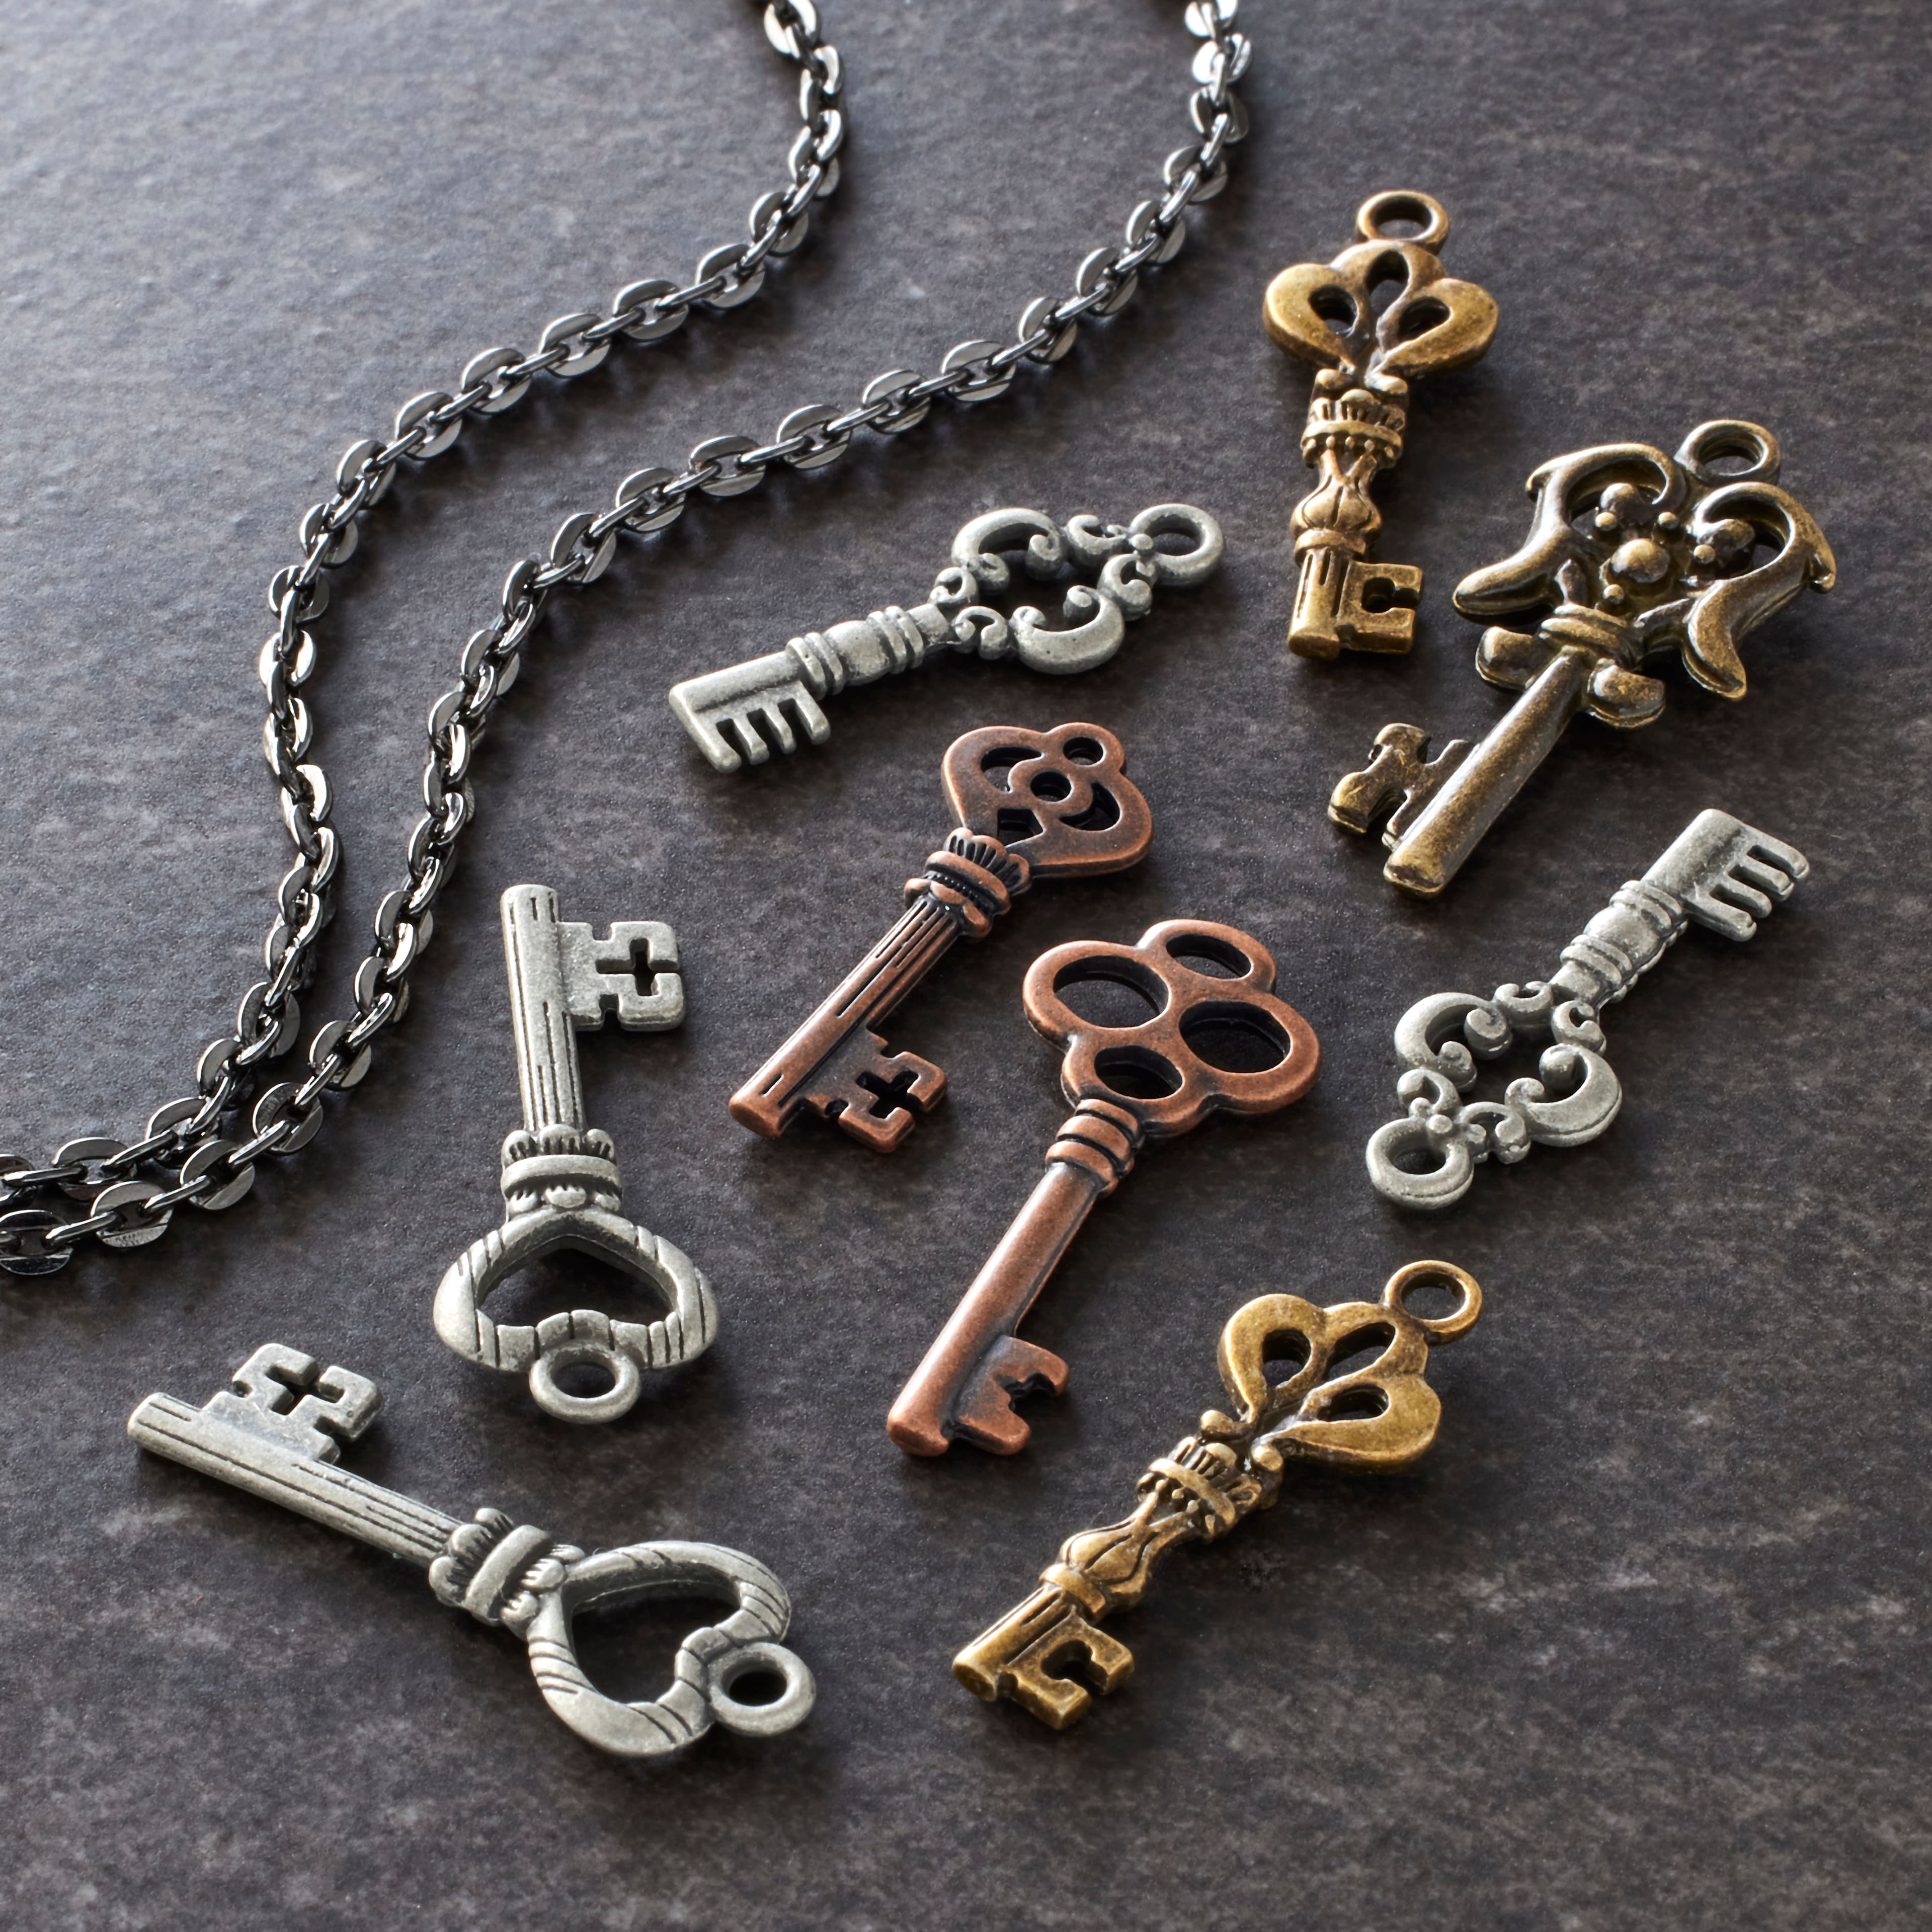 5 x Antique style bronze Key charm  vintage style key pendant bead finding 